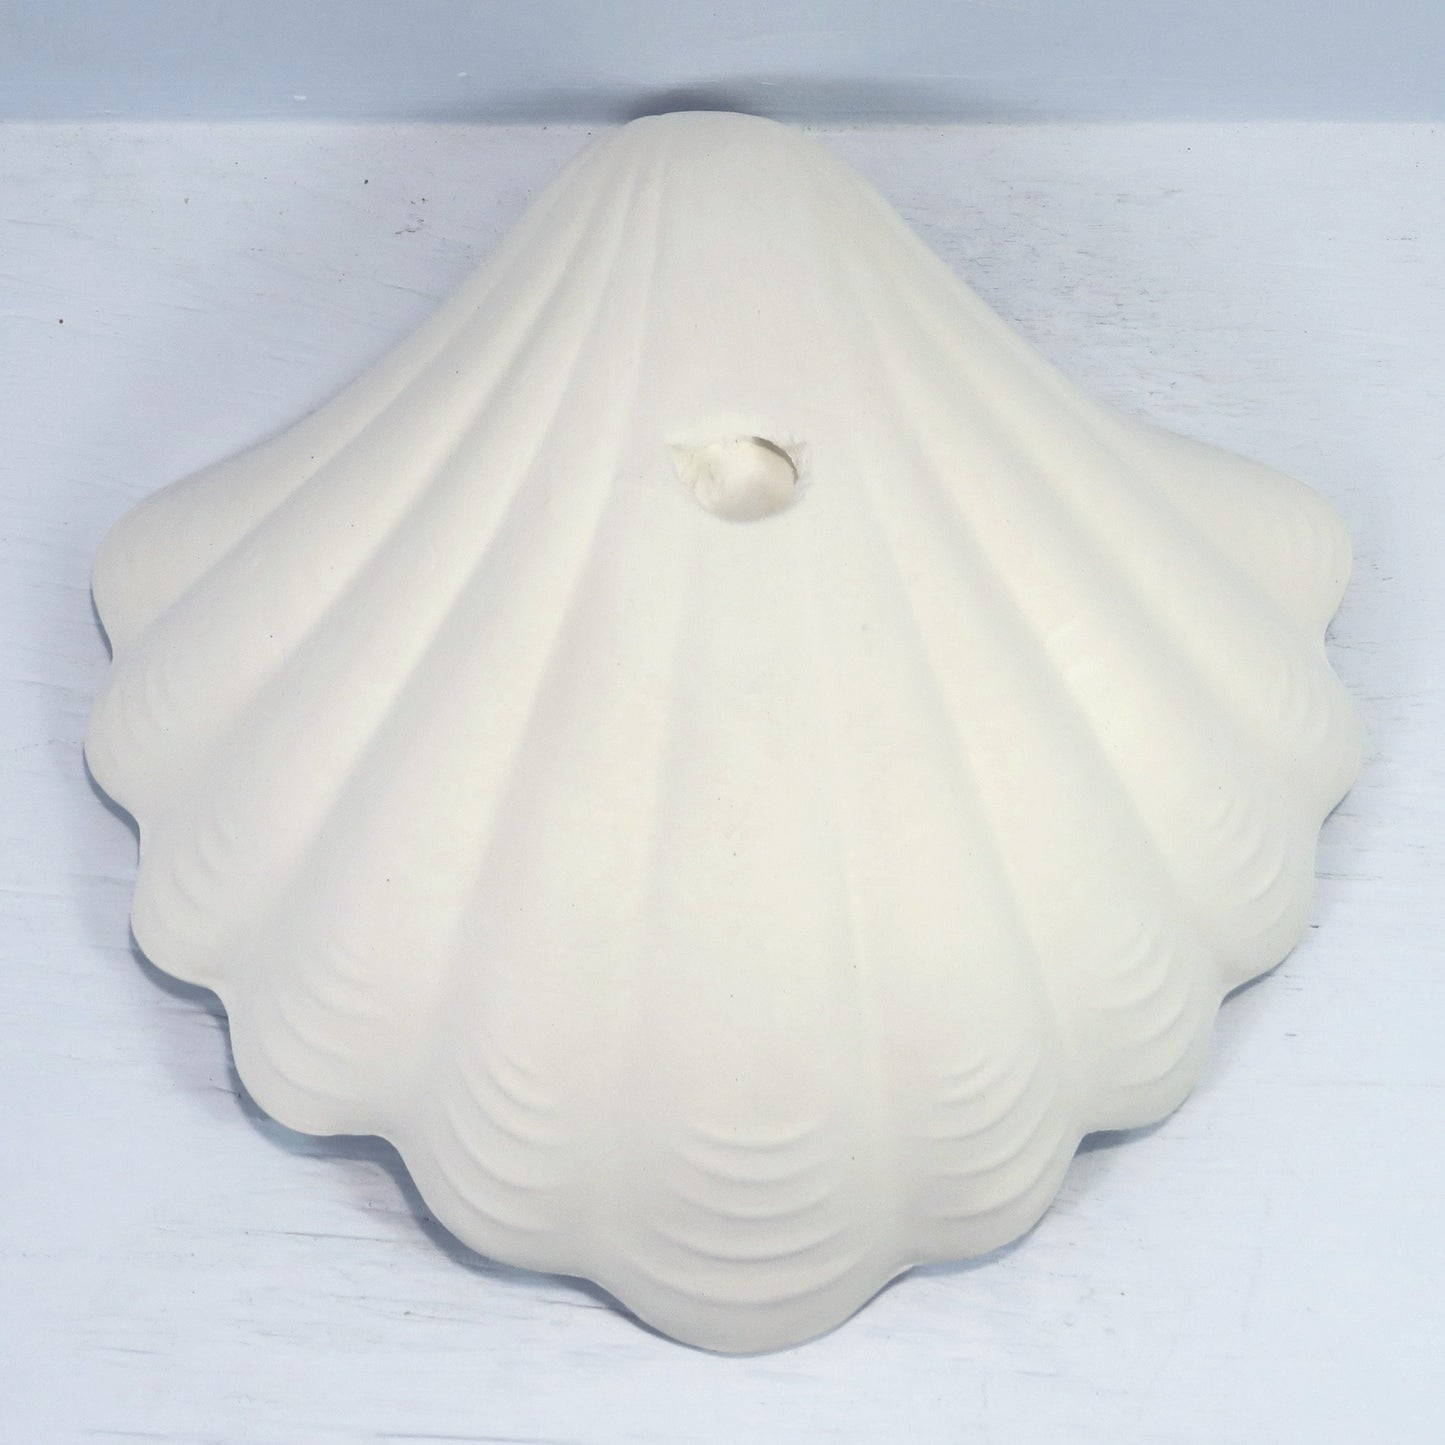 Ready to Paint Ceramic Shell Trinket Dish / Shell Decor / Jewelry Dish To Paint / Beach Decor / Beach Lover Gift / Paintable Ceramics